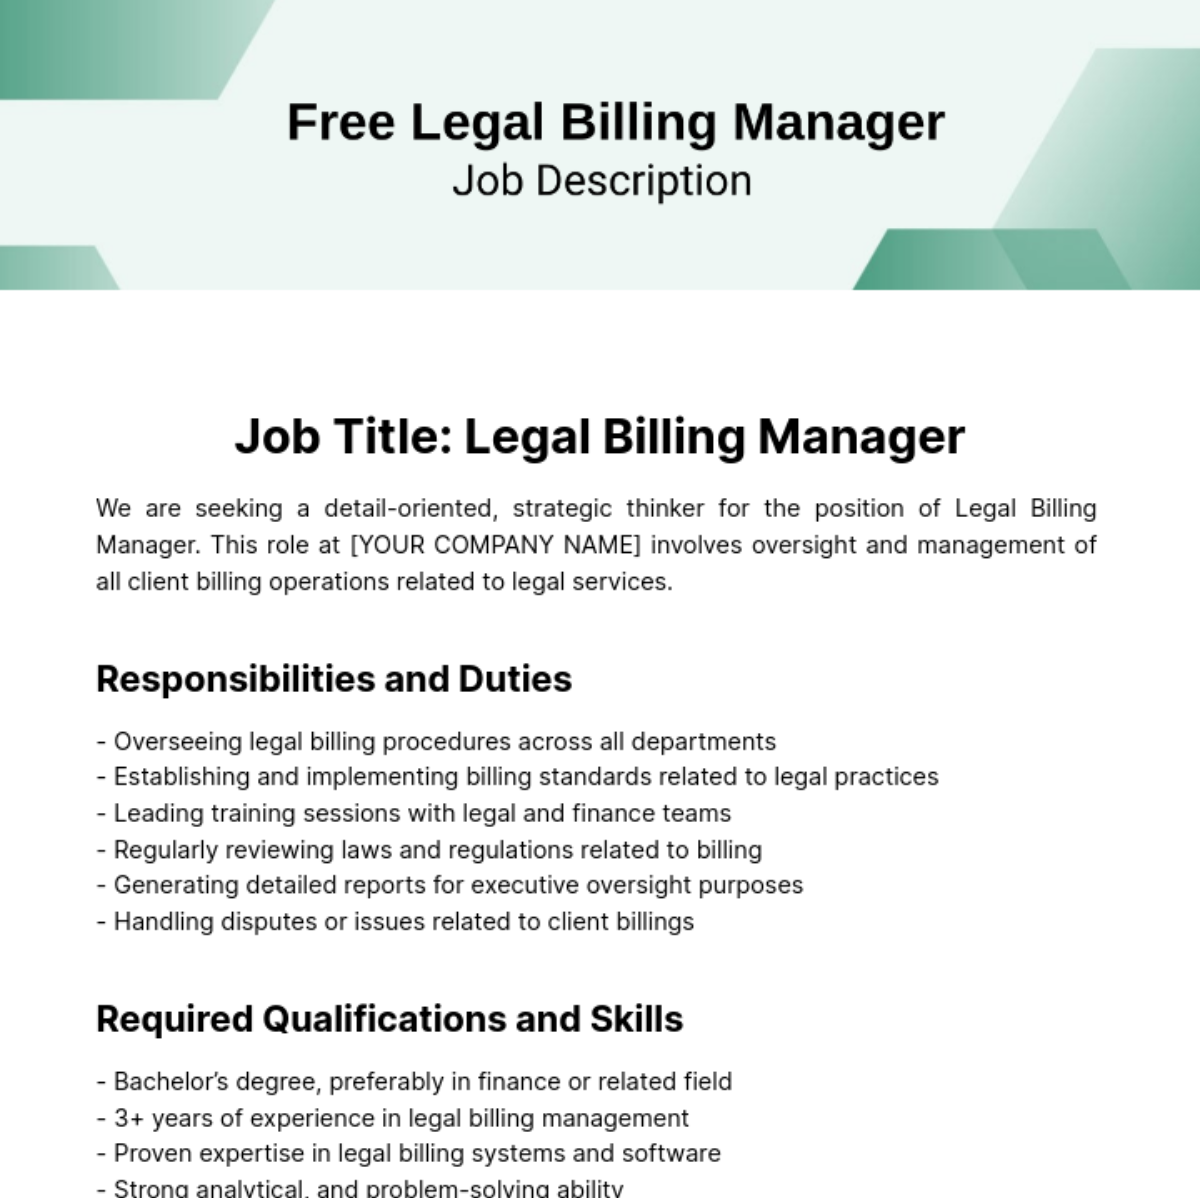 Free Legal Billing Manager Job Description Template